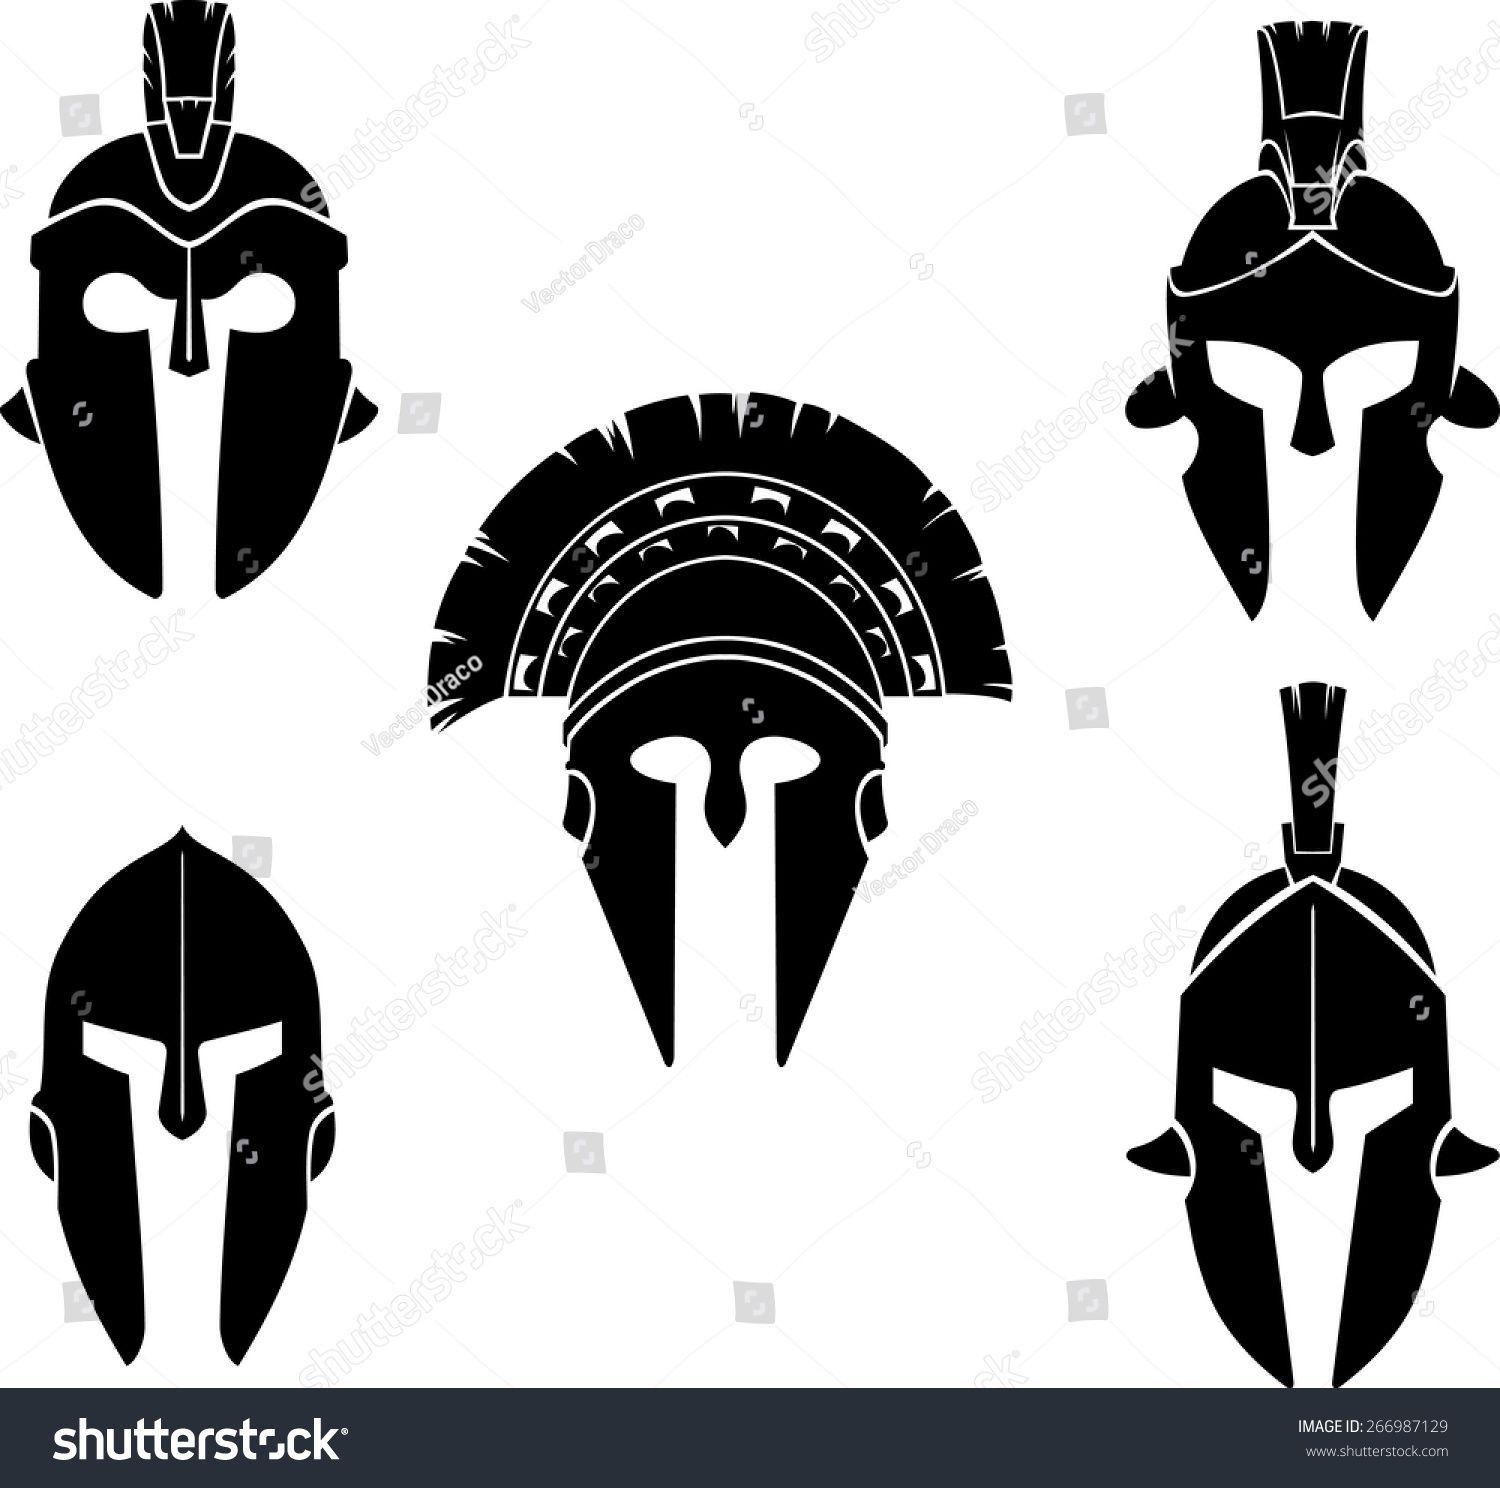 Spartan Warrior Helmet Logo - Spartan Helmet Silhouette Set | Tattoos | Pinterest | Spartan helmet ...